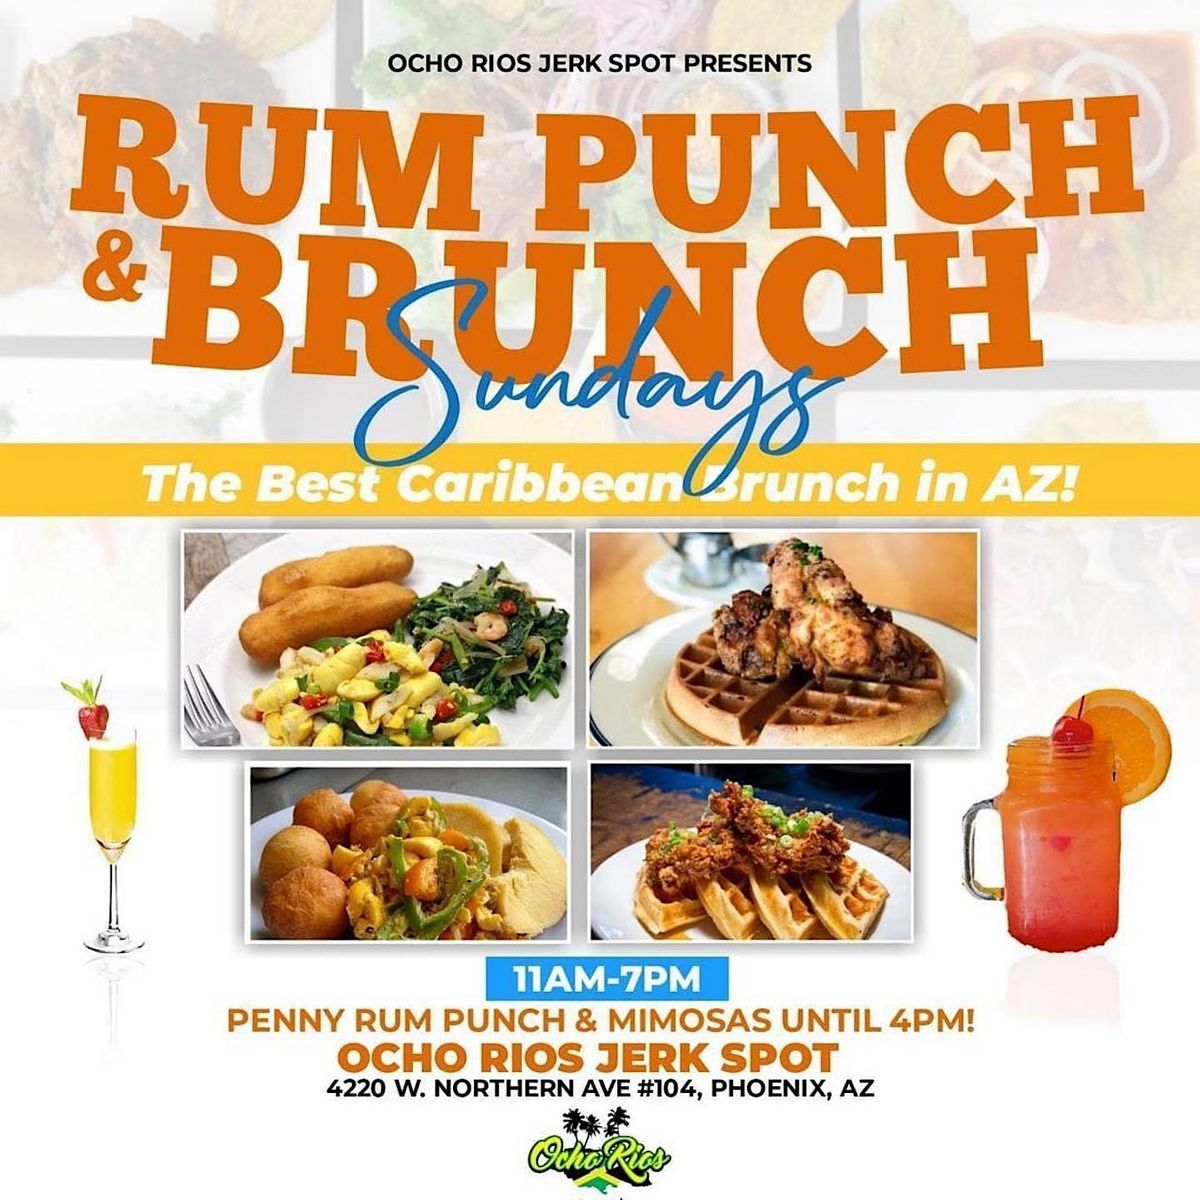 Rum Punch & Brunch Sundays